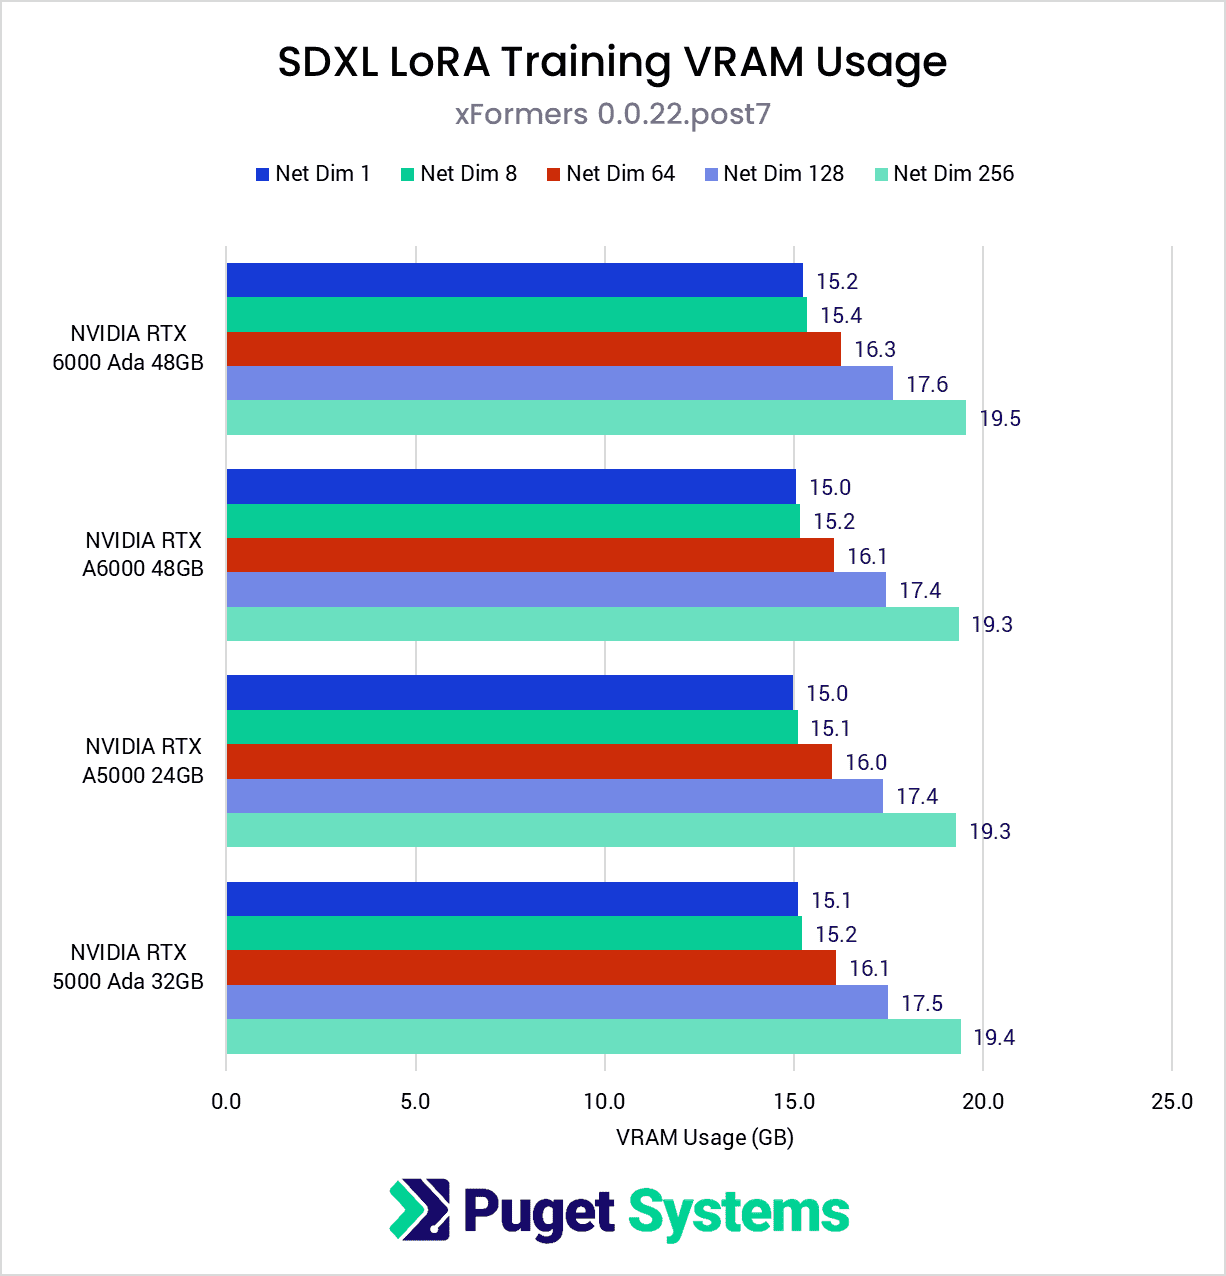 SDXL LoRA Training VRAM Usage by GPU - xFormers